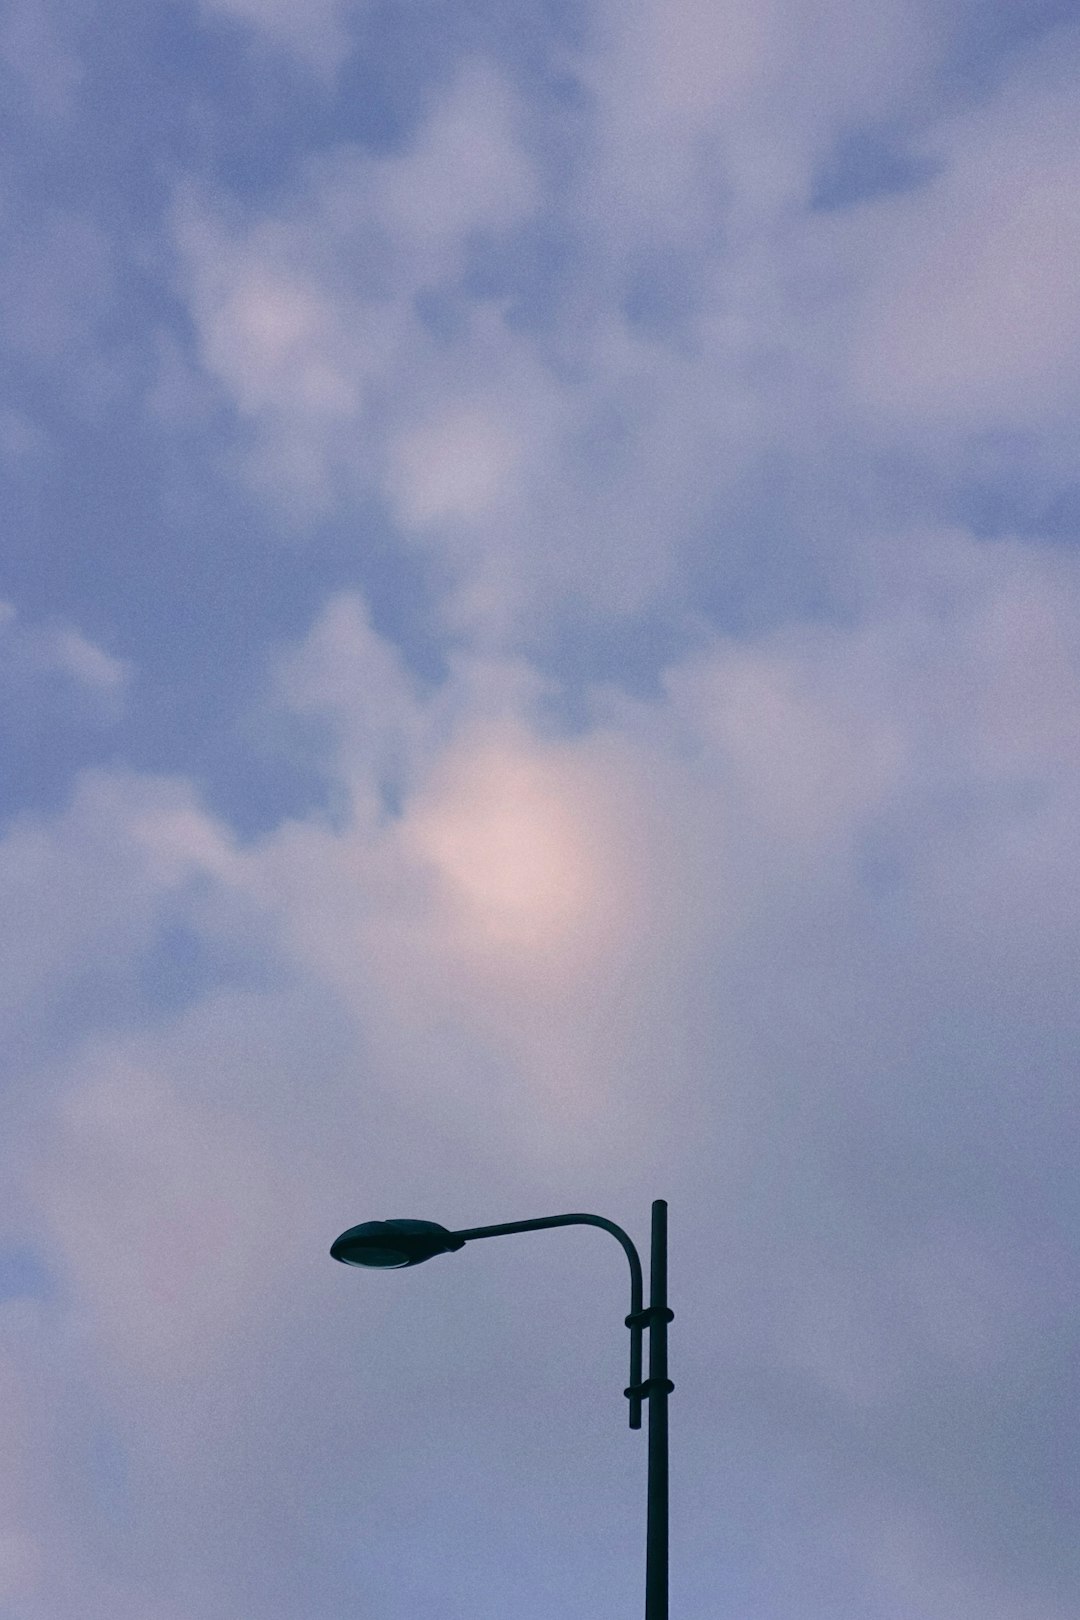 black street light under blue sky